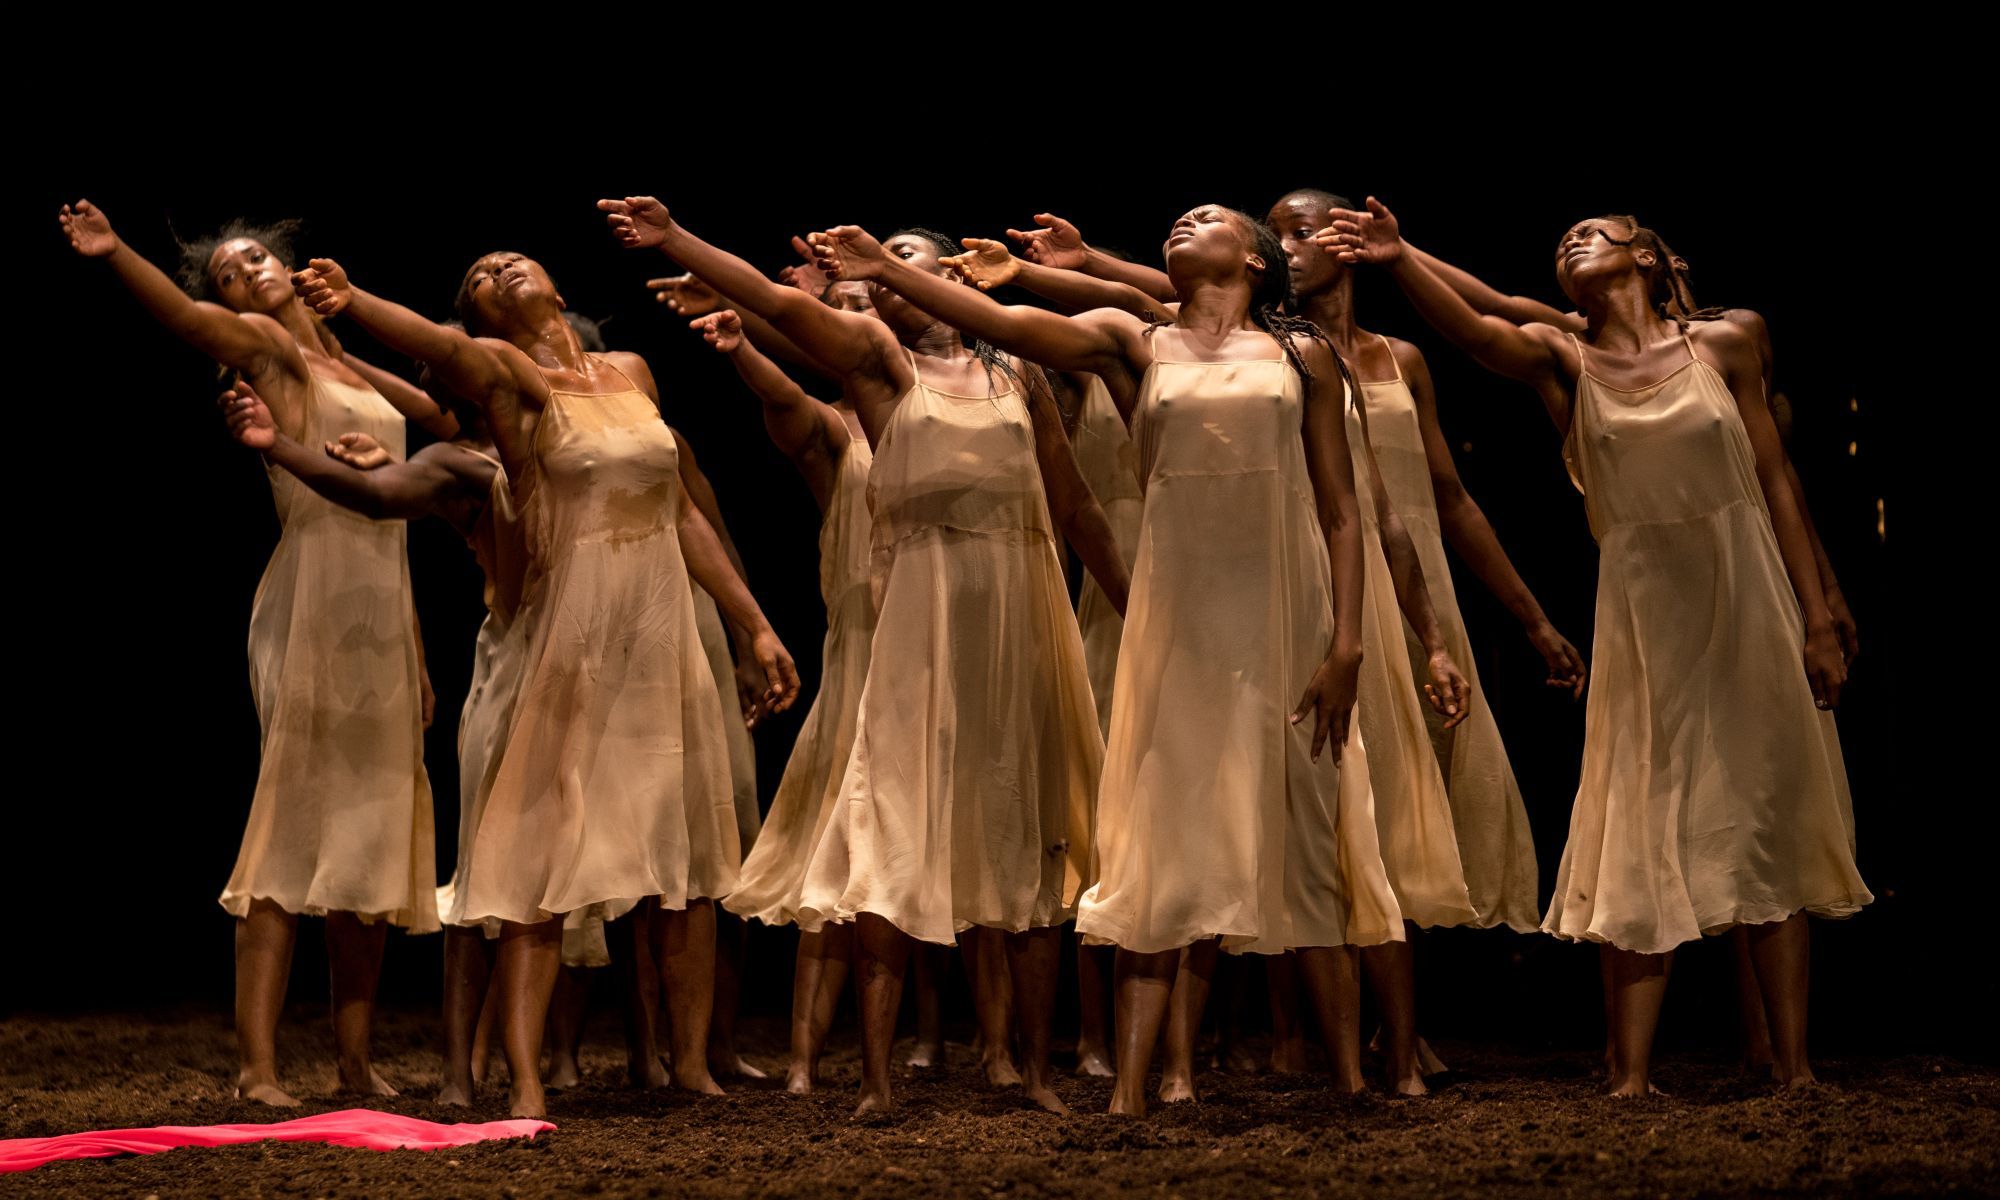 Eight Black women dancers in light dresses dance on a dark stage